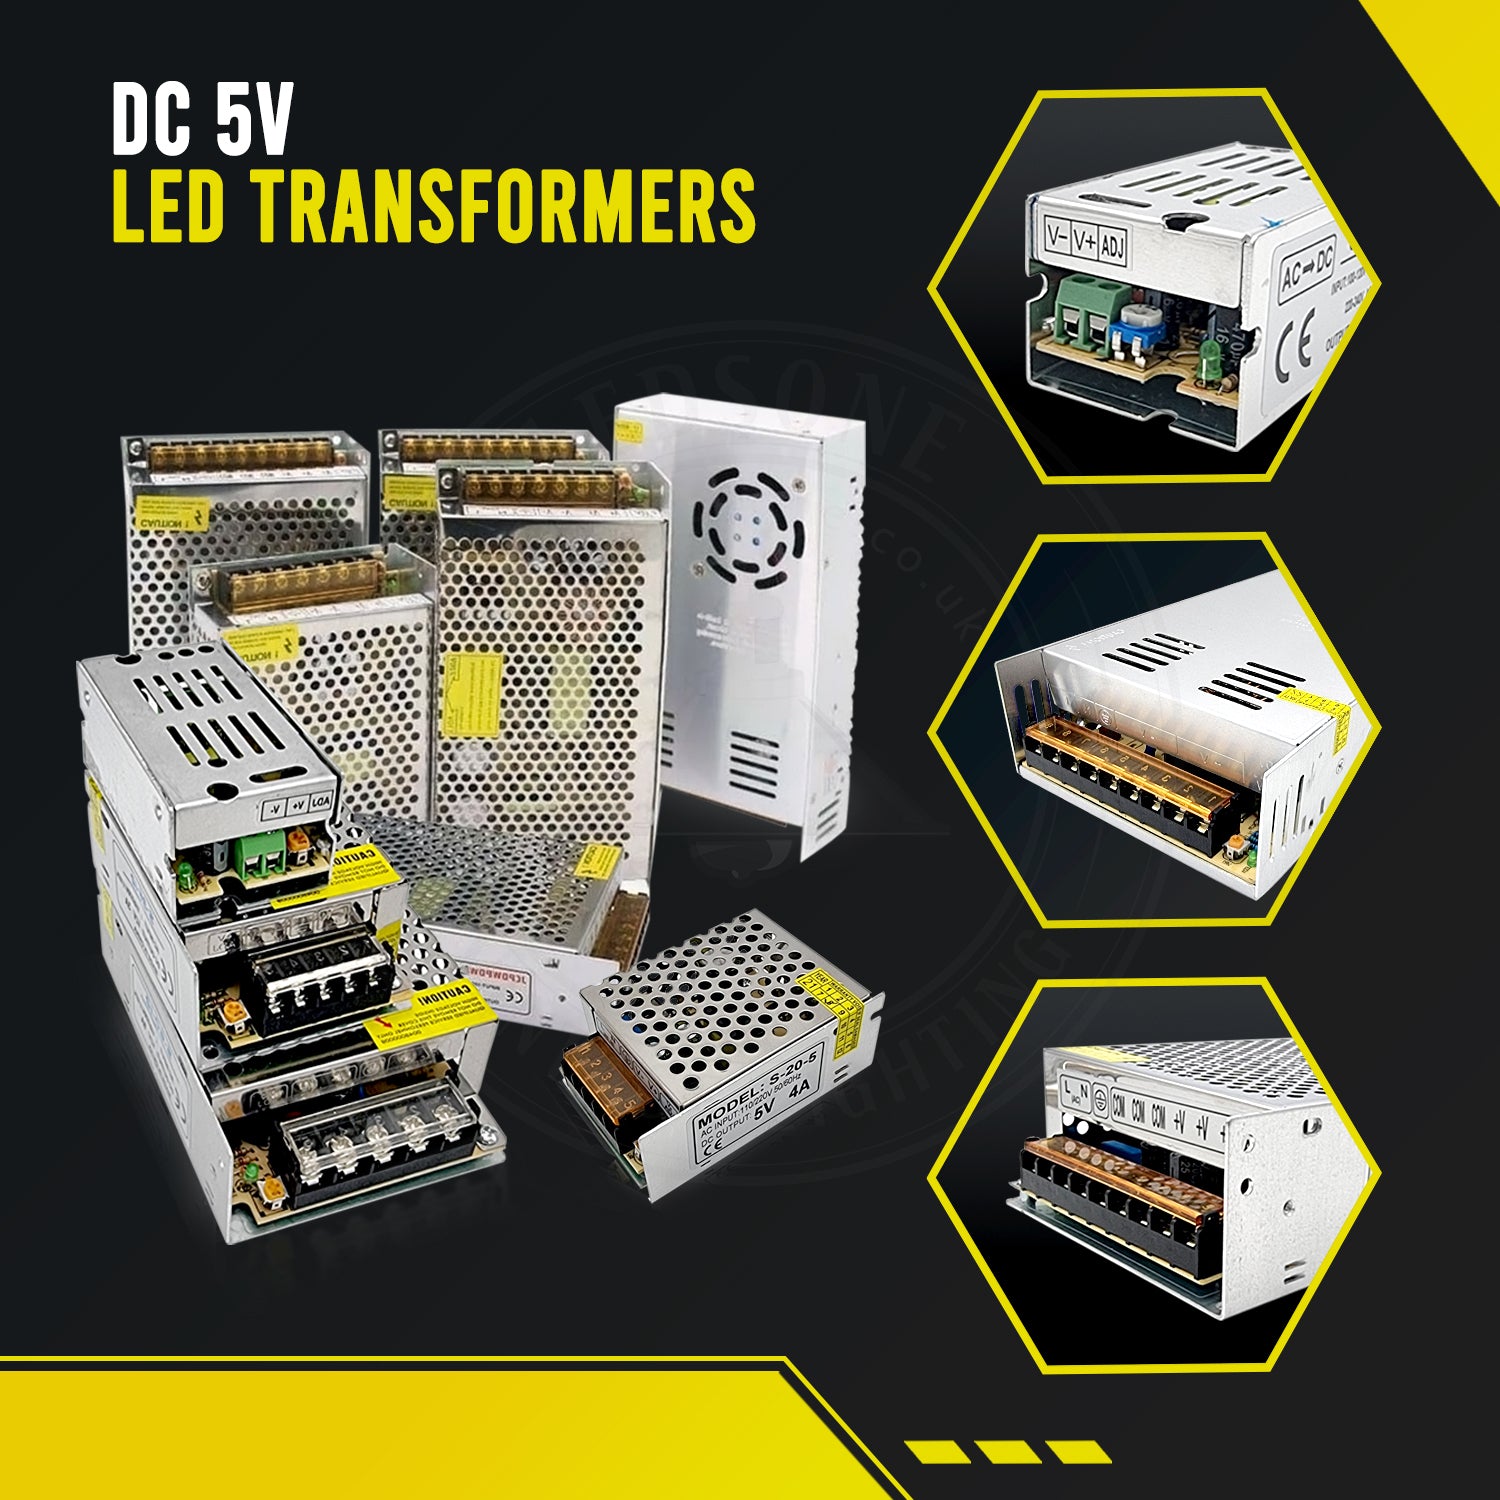 DC 5V LED Transformers